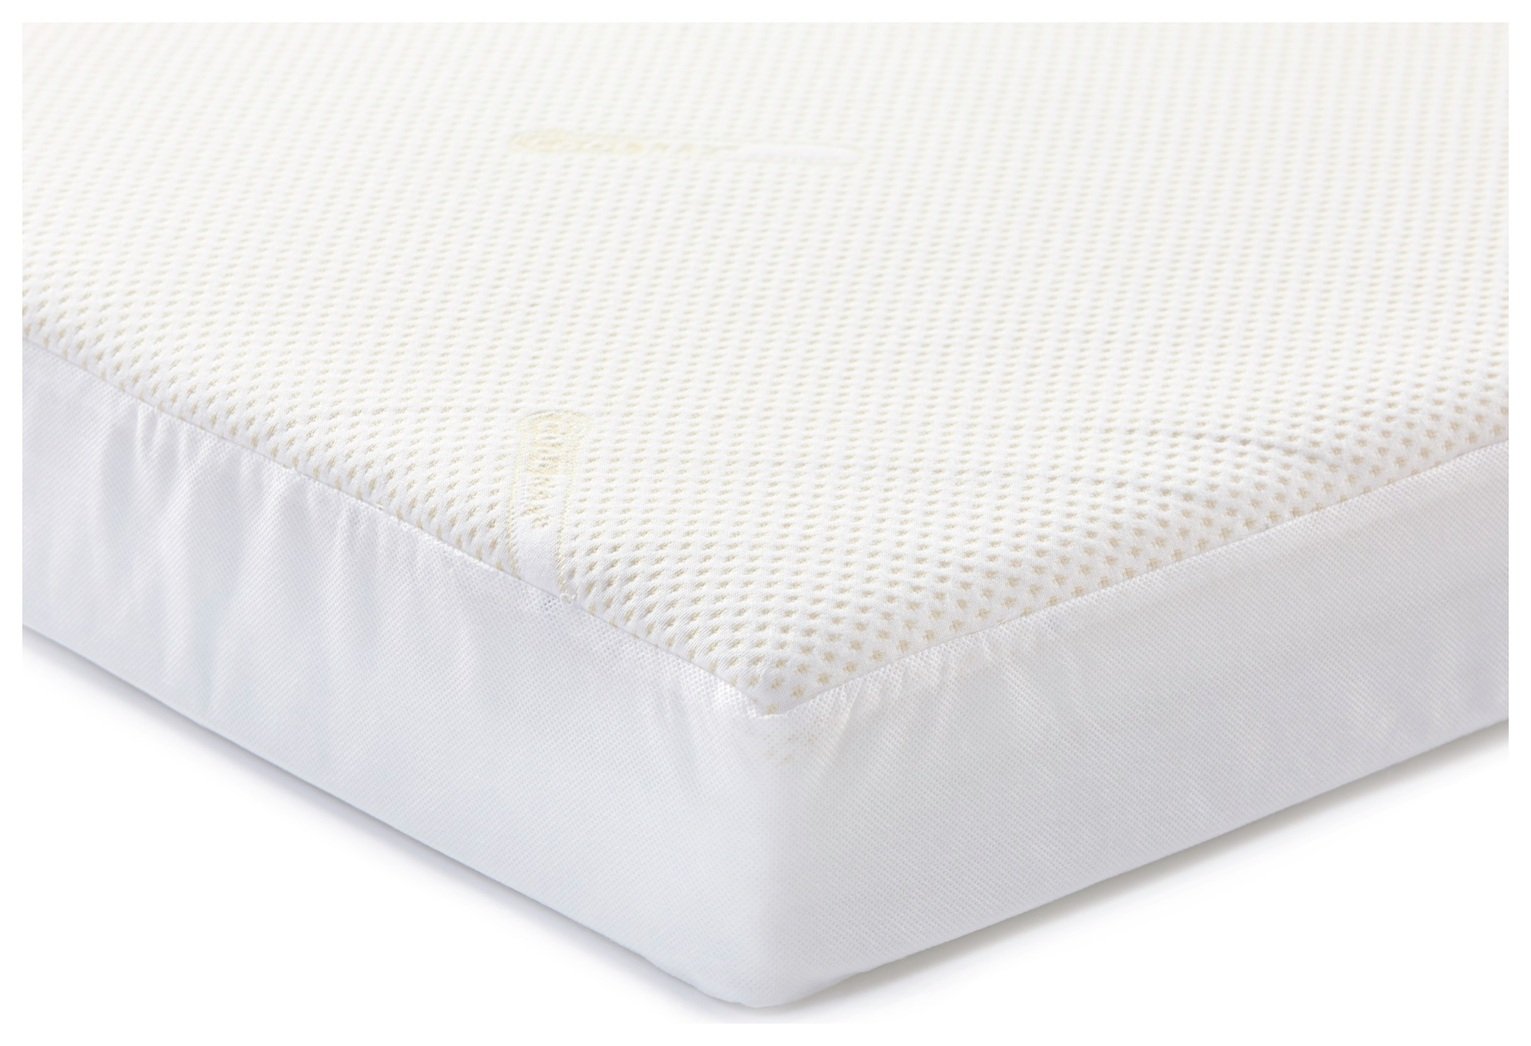 140 x 70cm cot bed size mattress